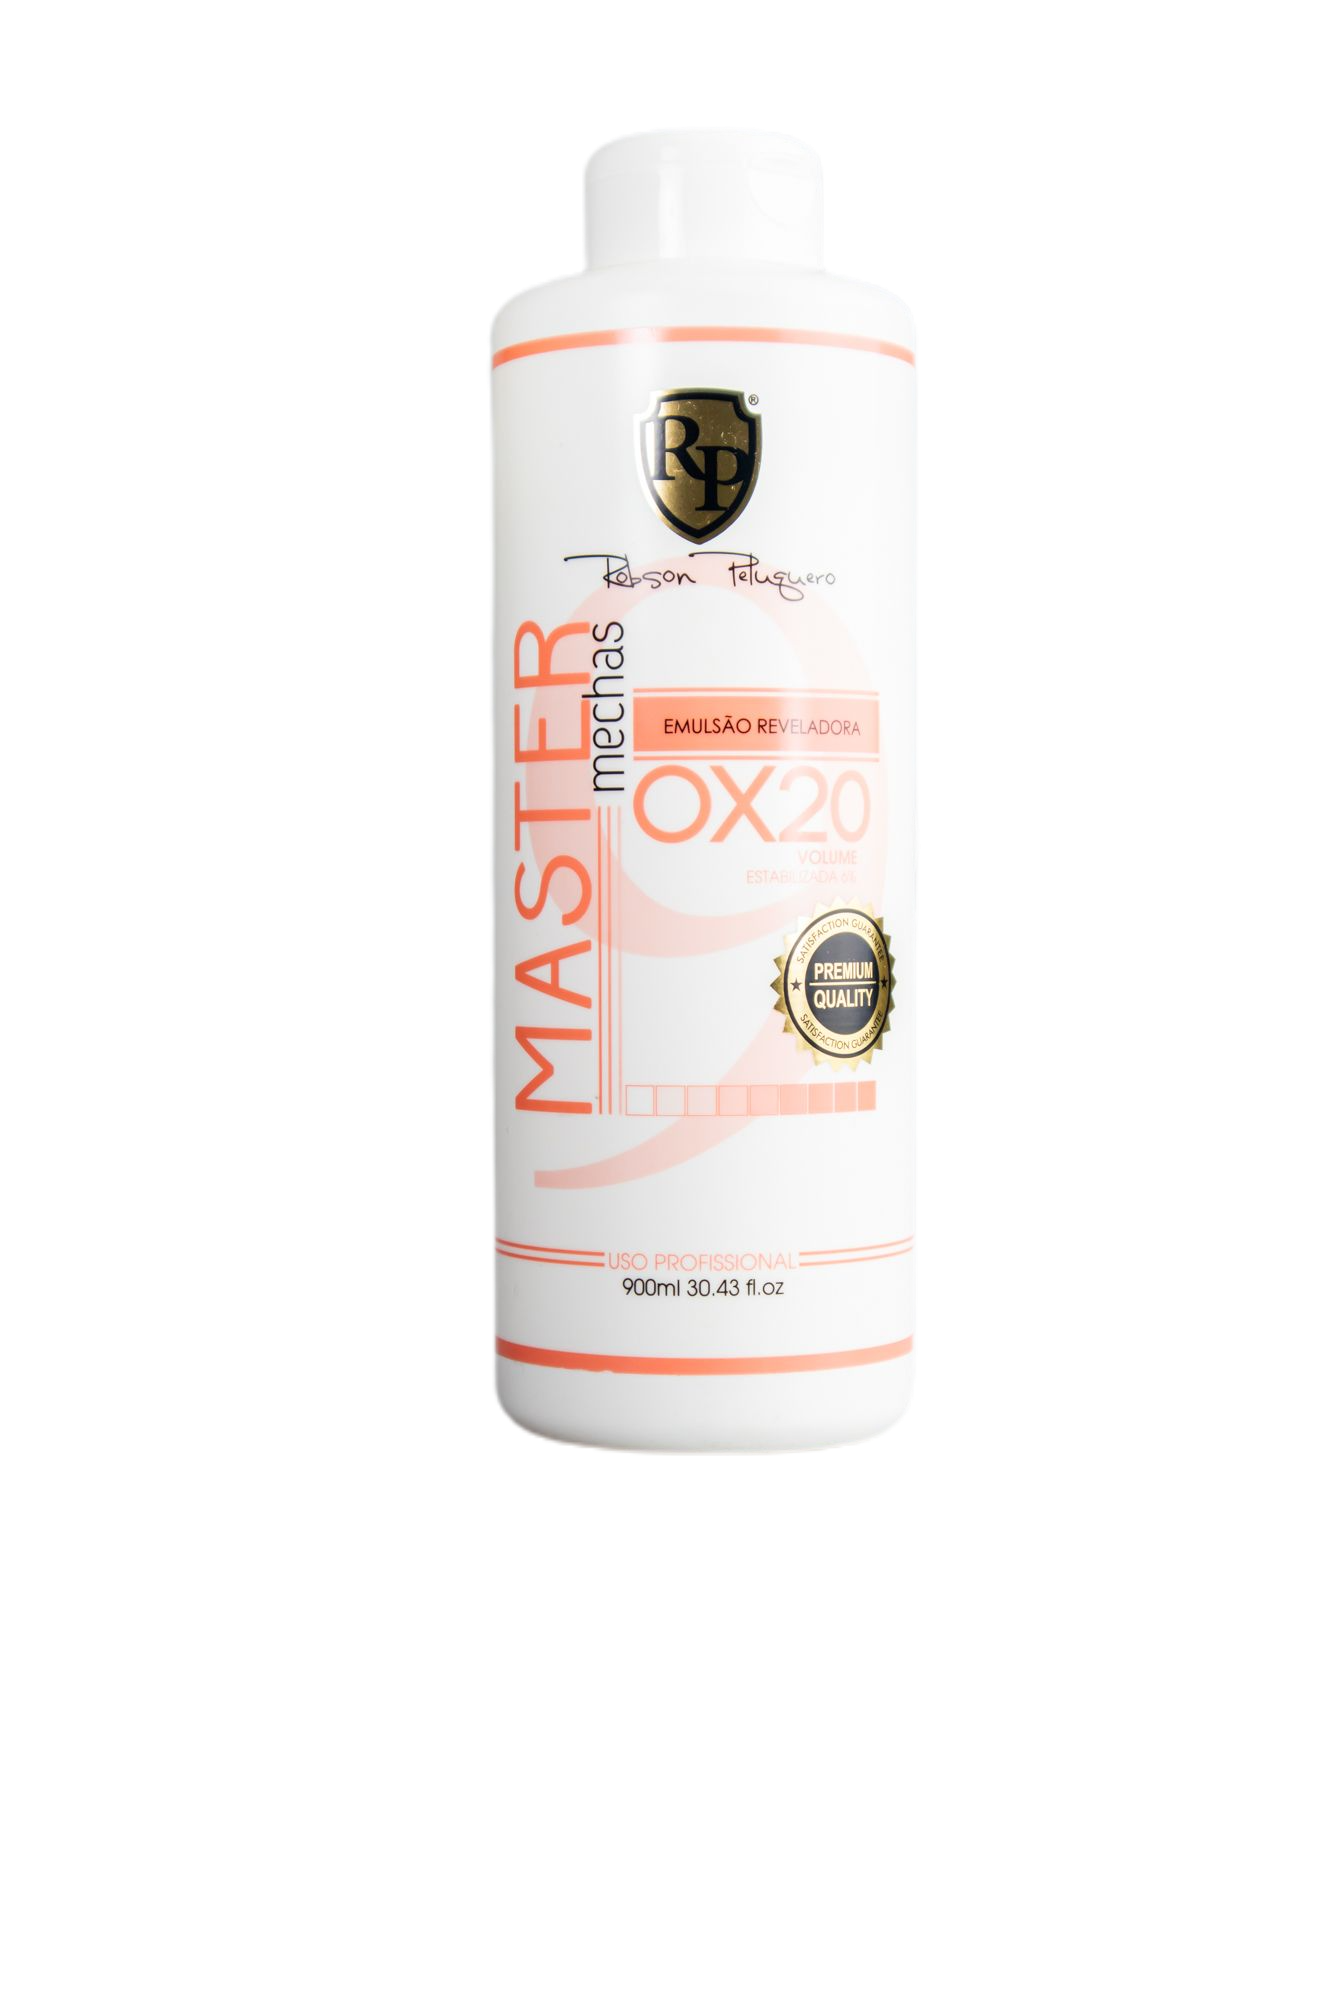 Robson Peluquero Hair Treatment Bleaching Powder Master Mechas Revealing Emulsion OX 20 900ml - Robson Peluquero